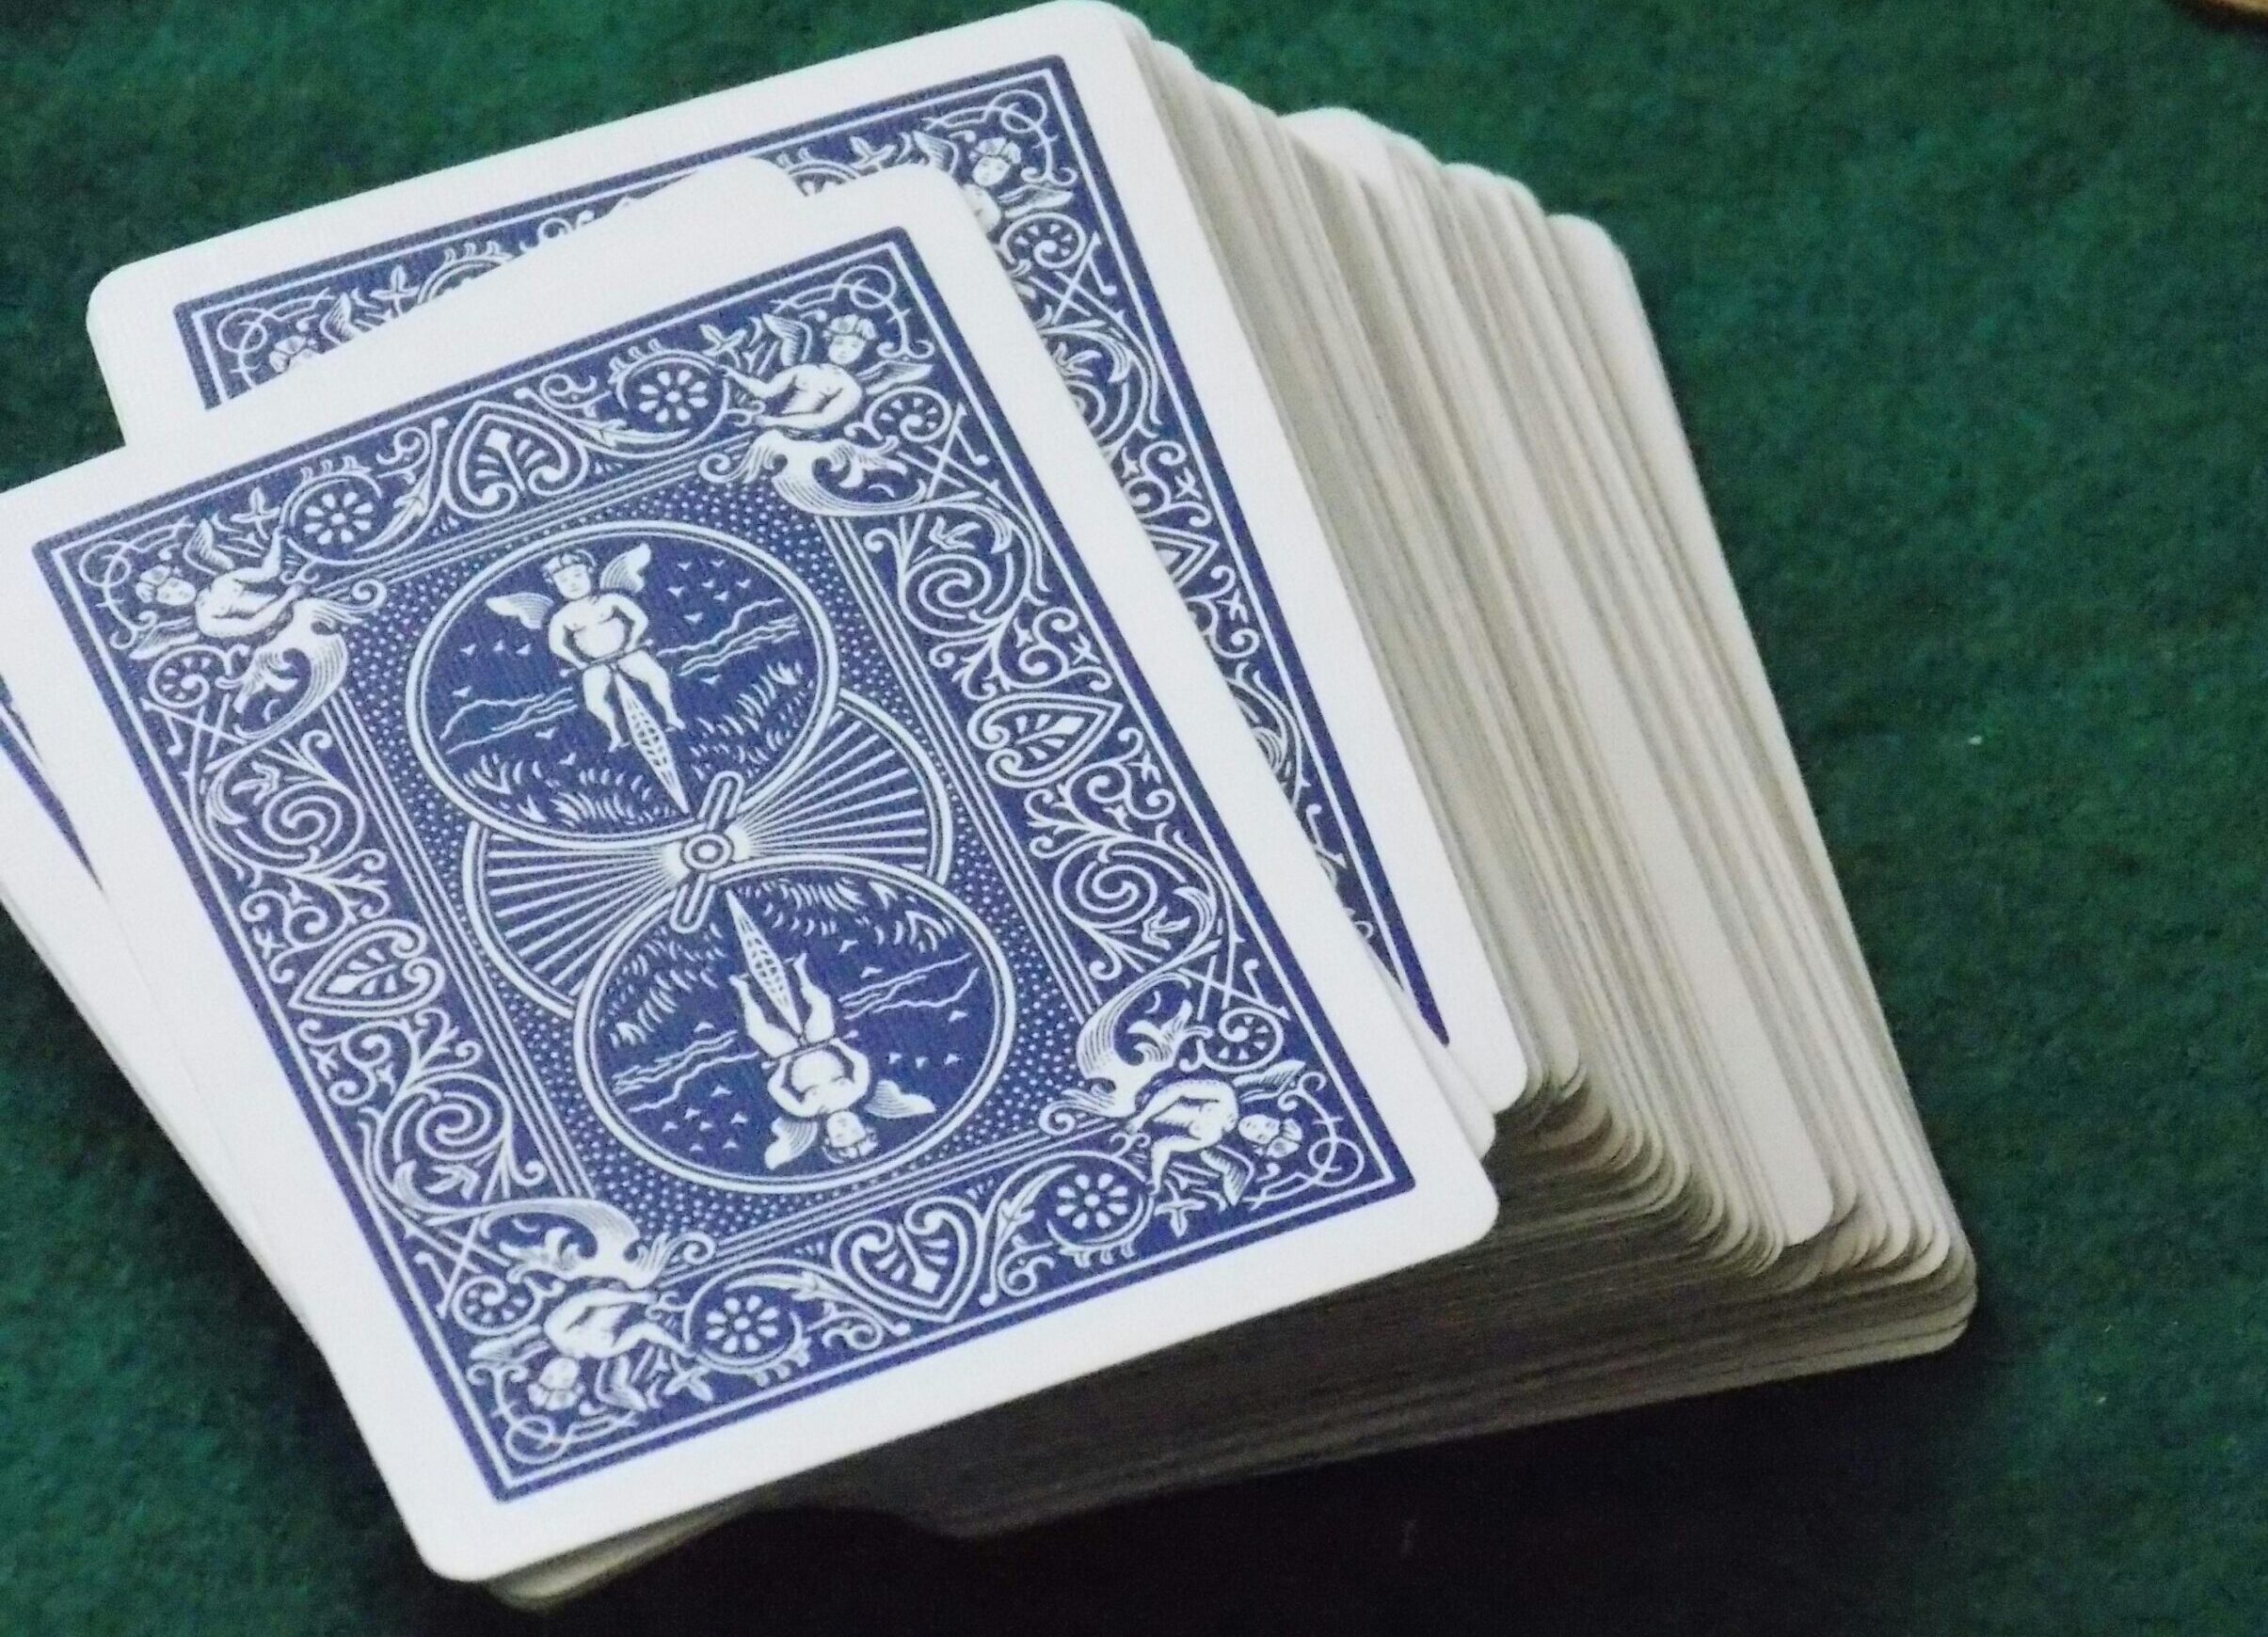 Special Hands in Canasta, deck of cards